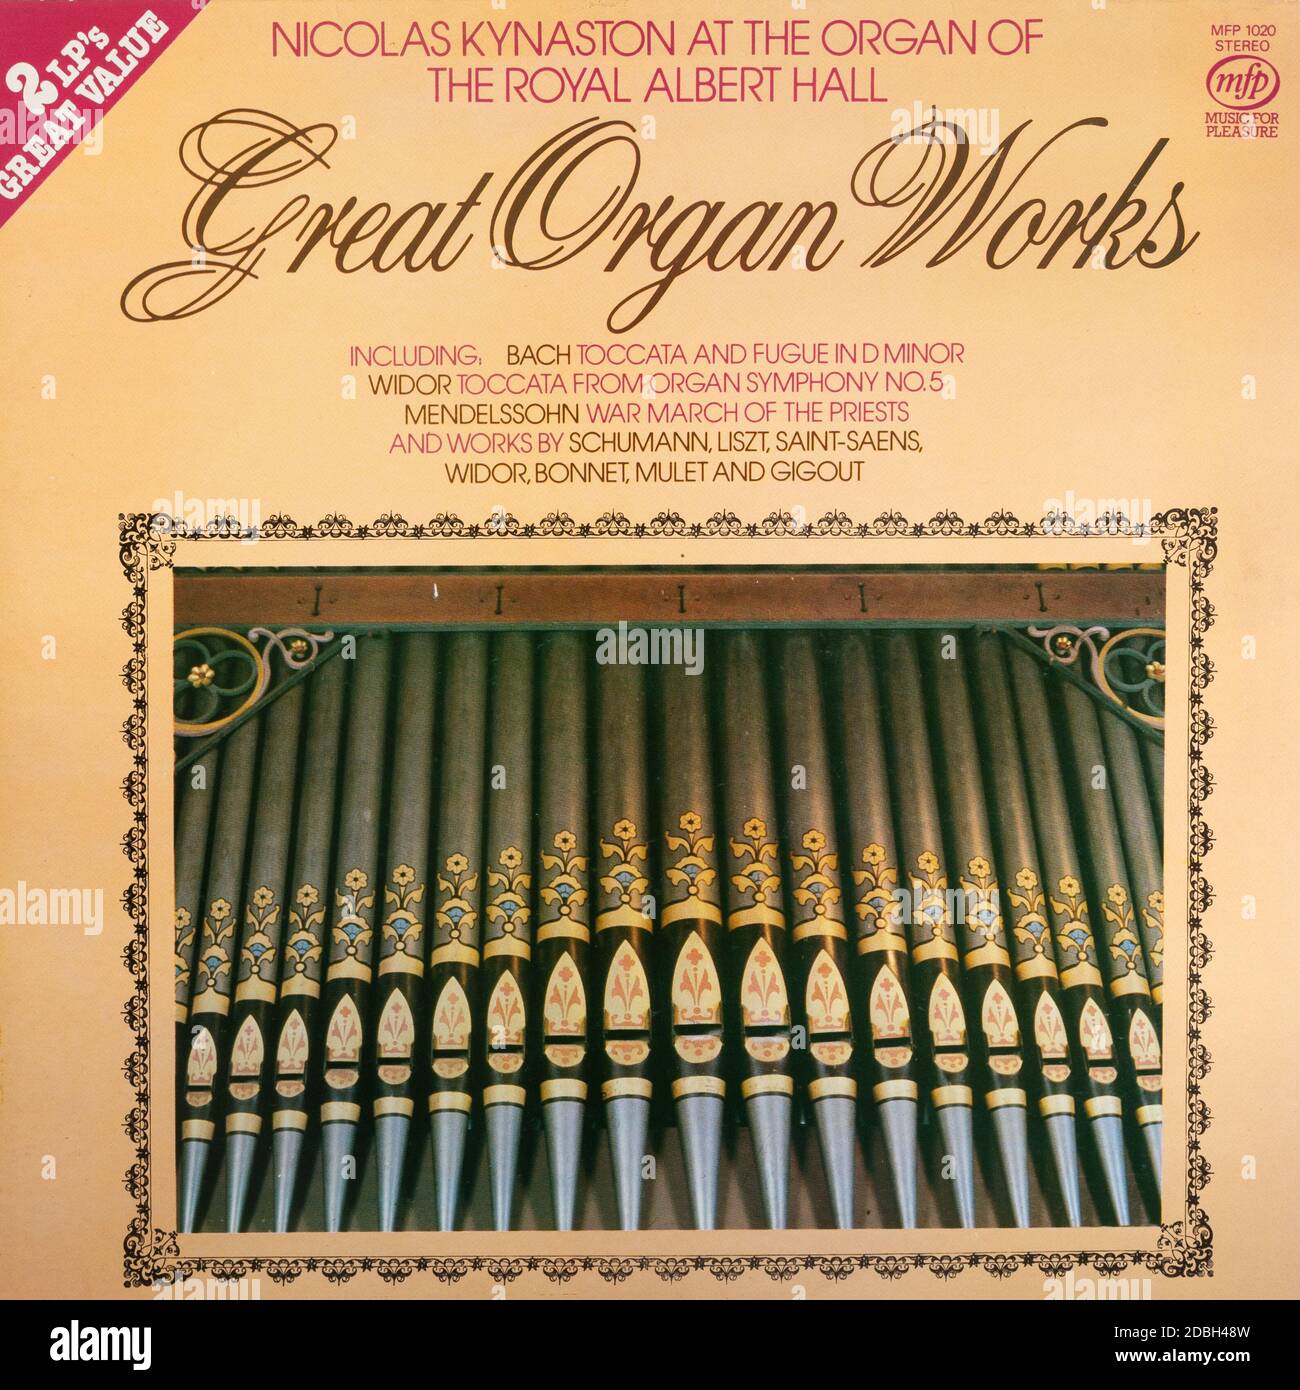 Great Organ Works with Nicolas Kynaston organist, vinyl LP record album cover Stock Photo